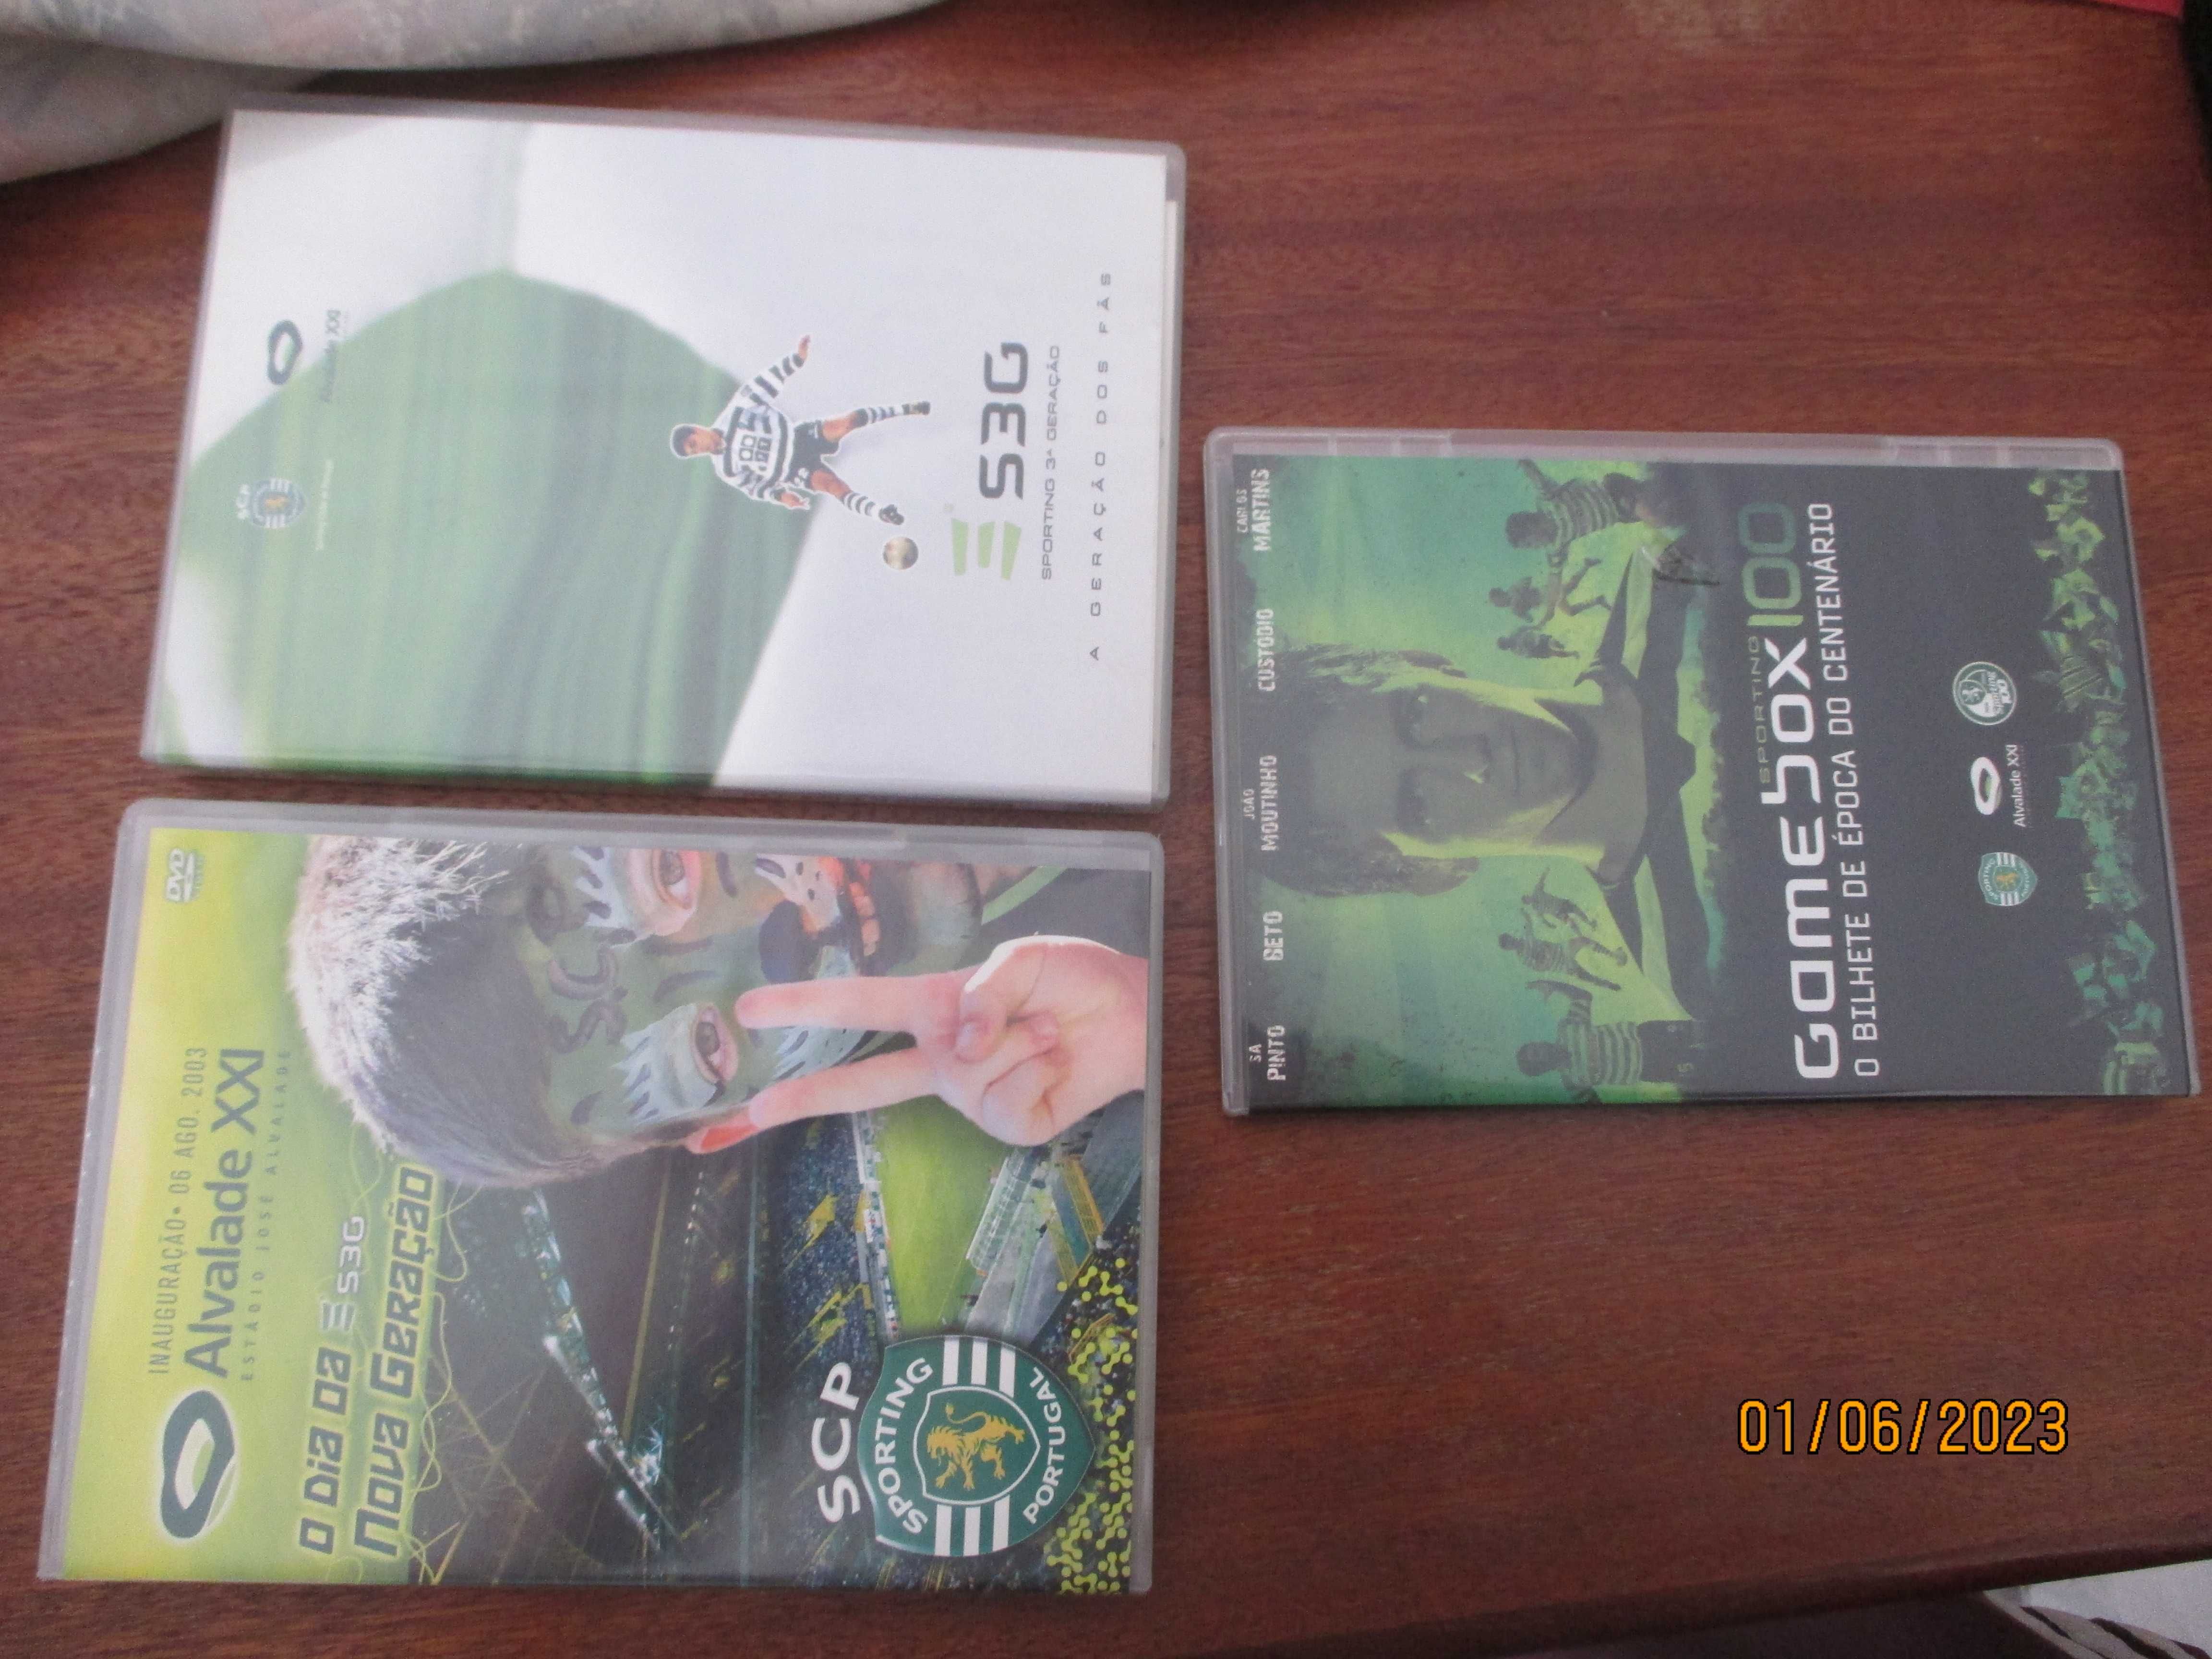 3 dvd's do Sporting C.P.